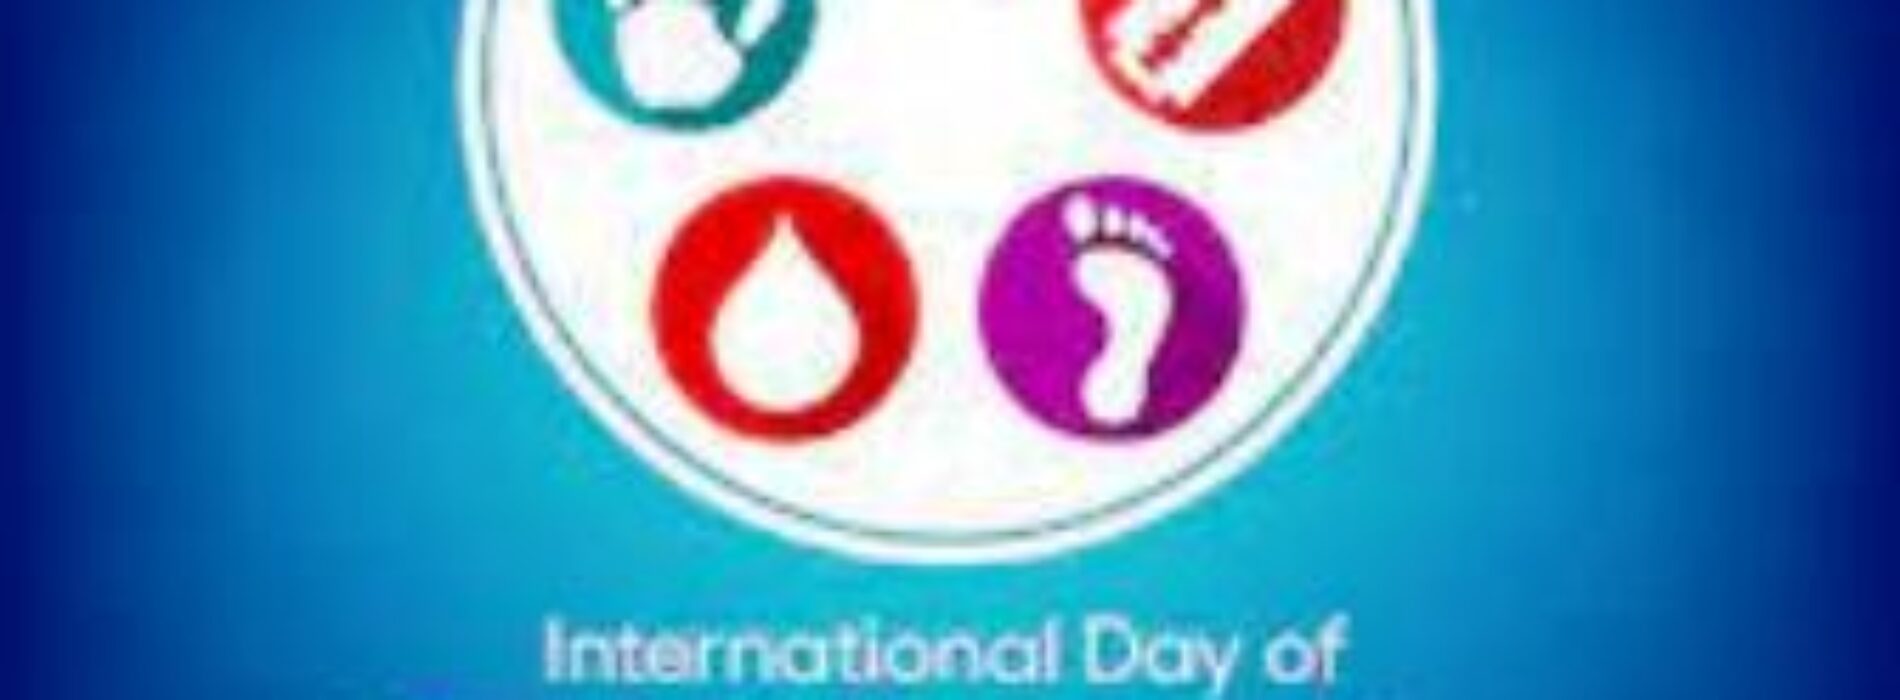 International Day of Zero Tolerance for FGM: World may miss eradication target – UNFPA, UNICEF say